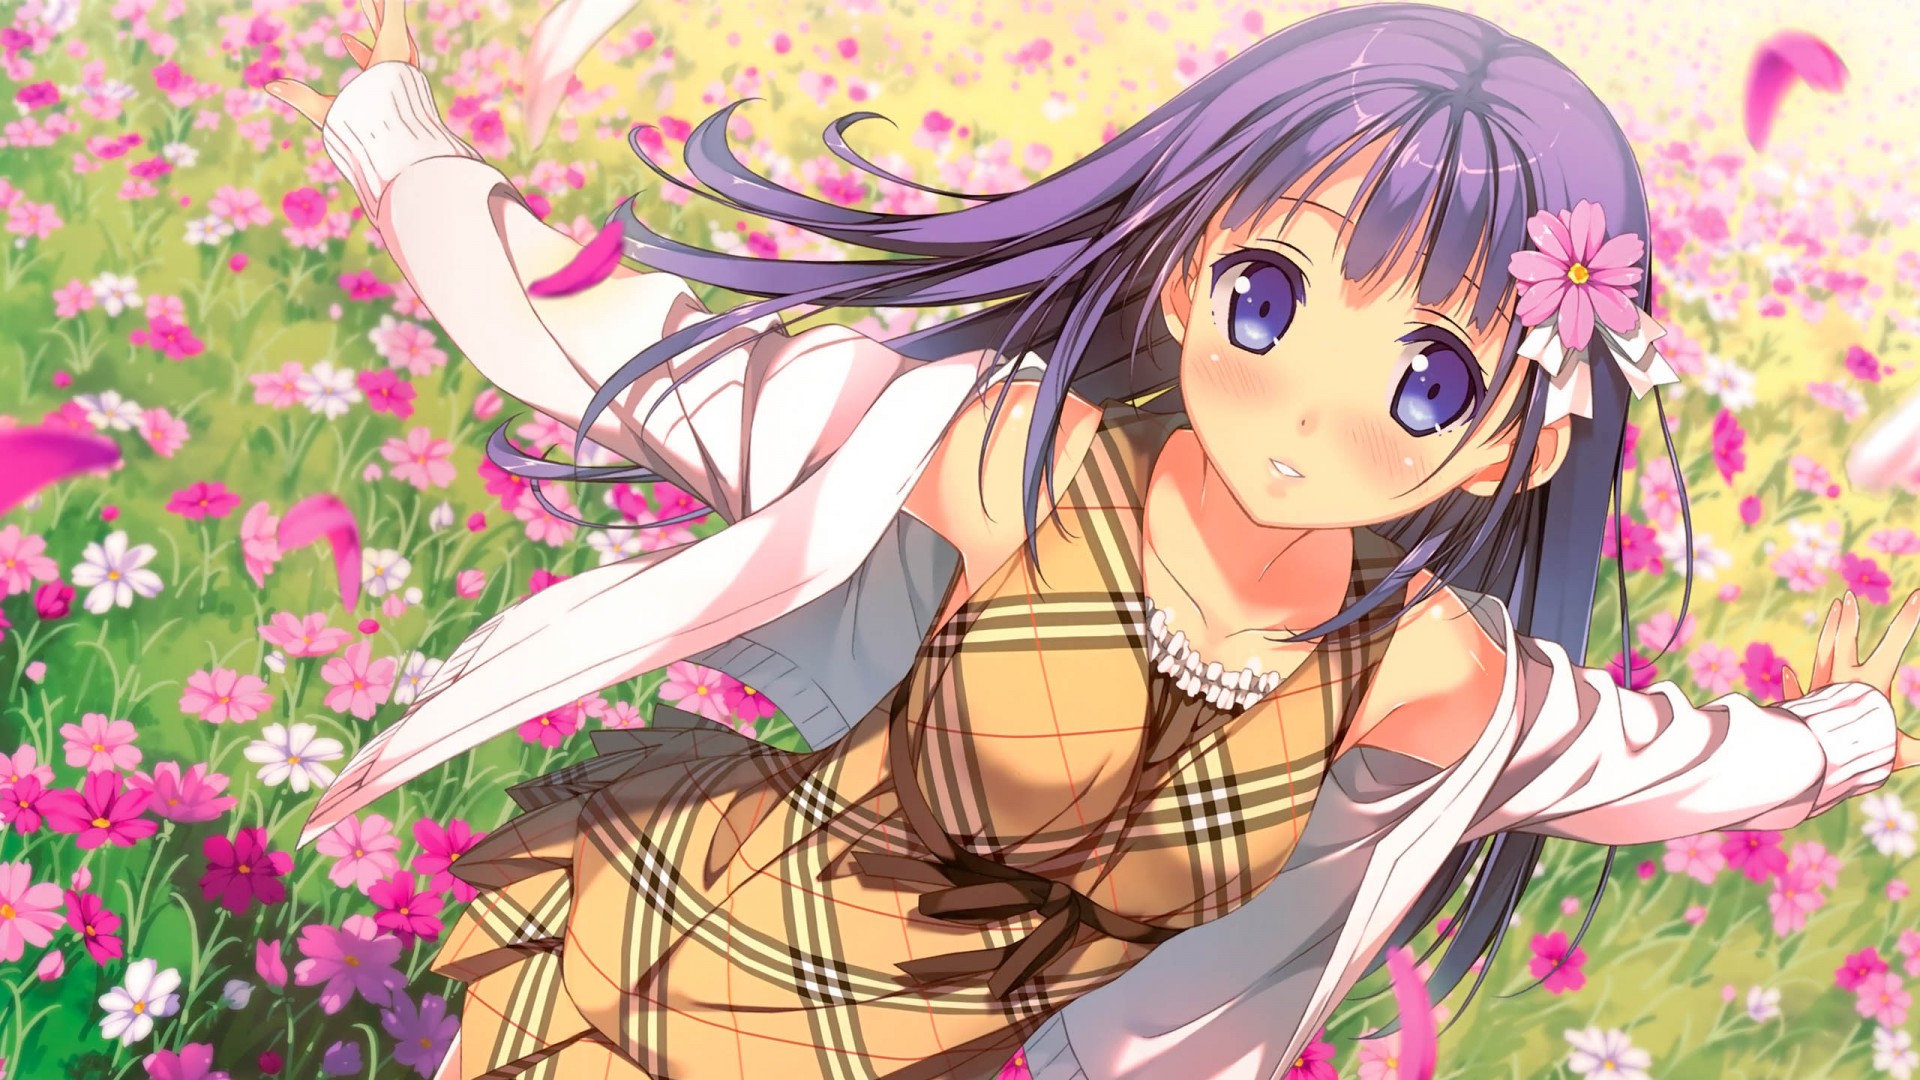 Anime 1920x1080 Afterschool of the 5th year anime girls Kantoku artwork flowers purple hair purple eyes dress field